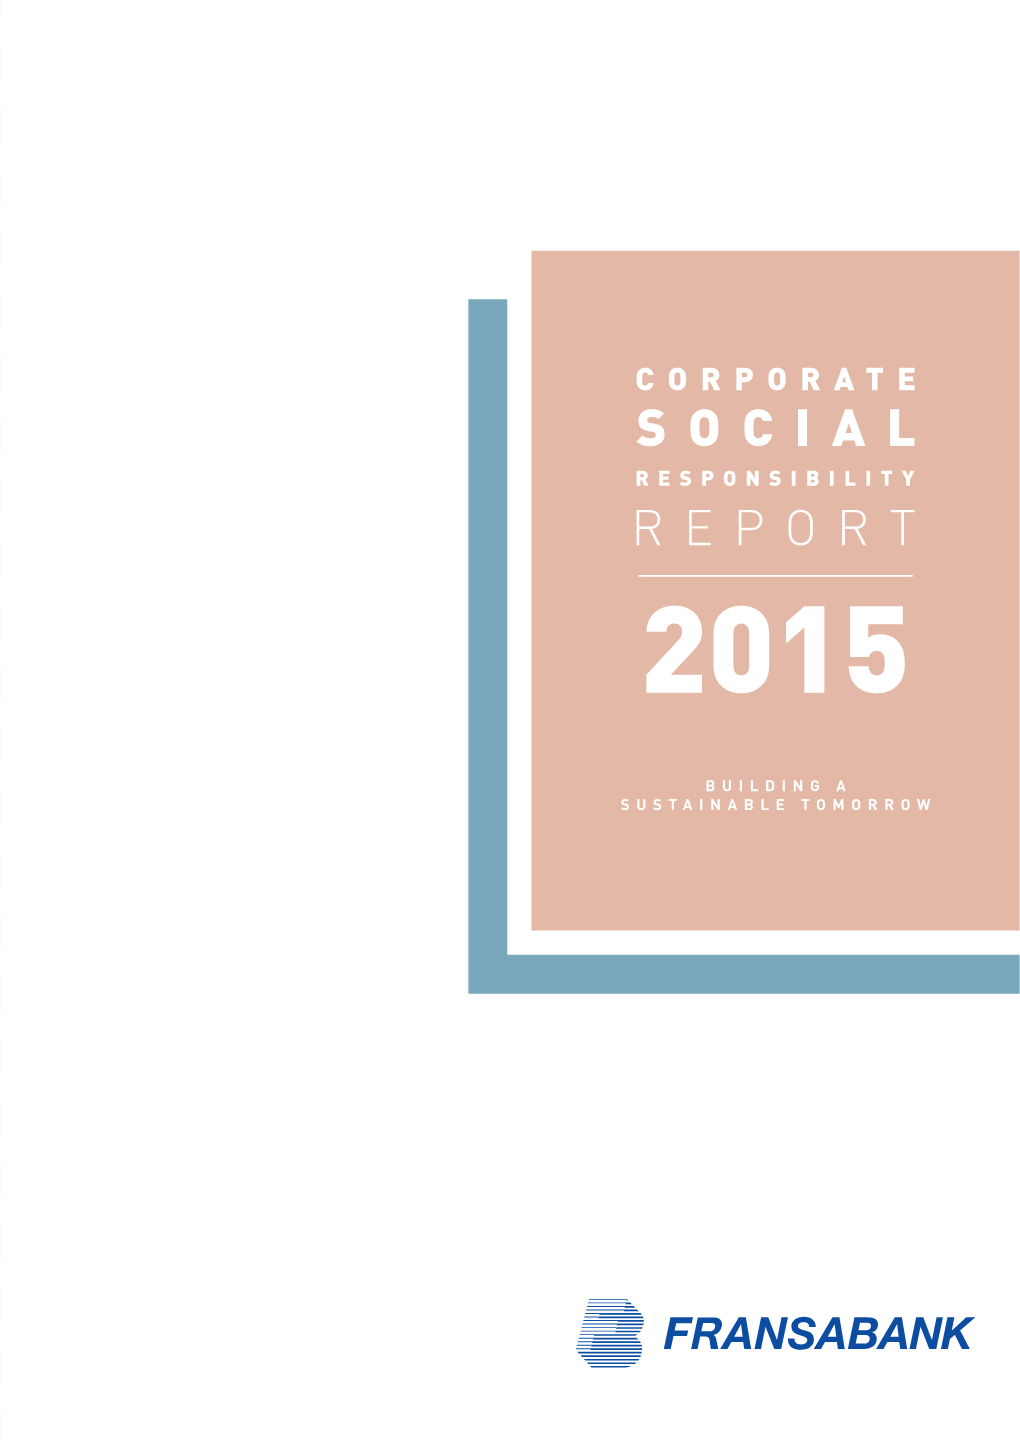 Fransabank CSR Report 2015.Pdf